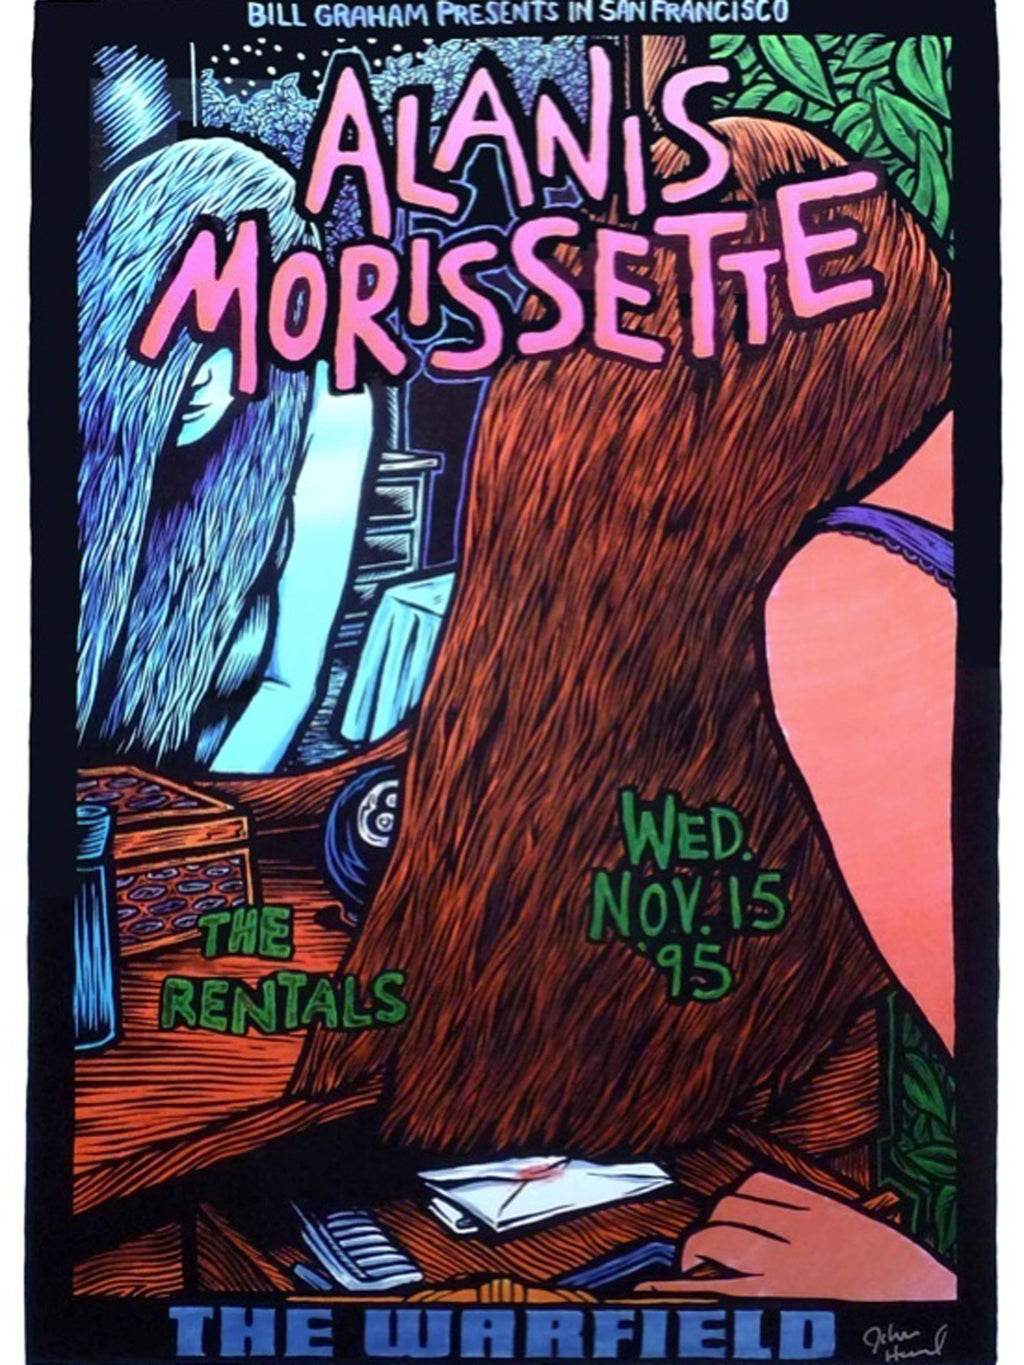 Vintage Music Art  -  Alanis Morissette In San Francisco - 0662